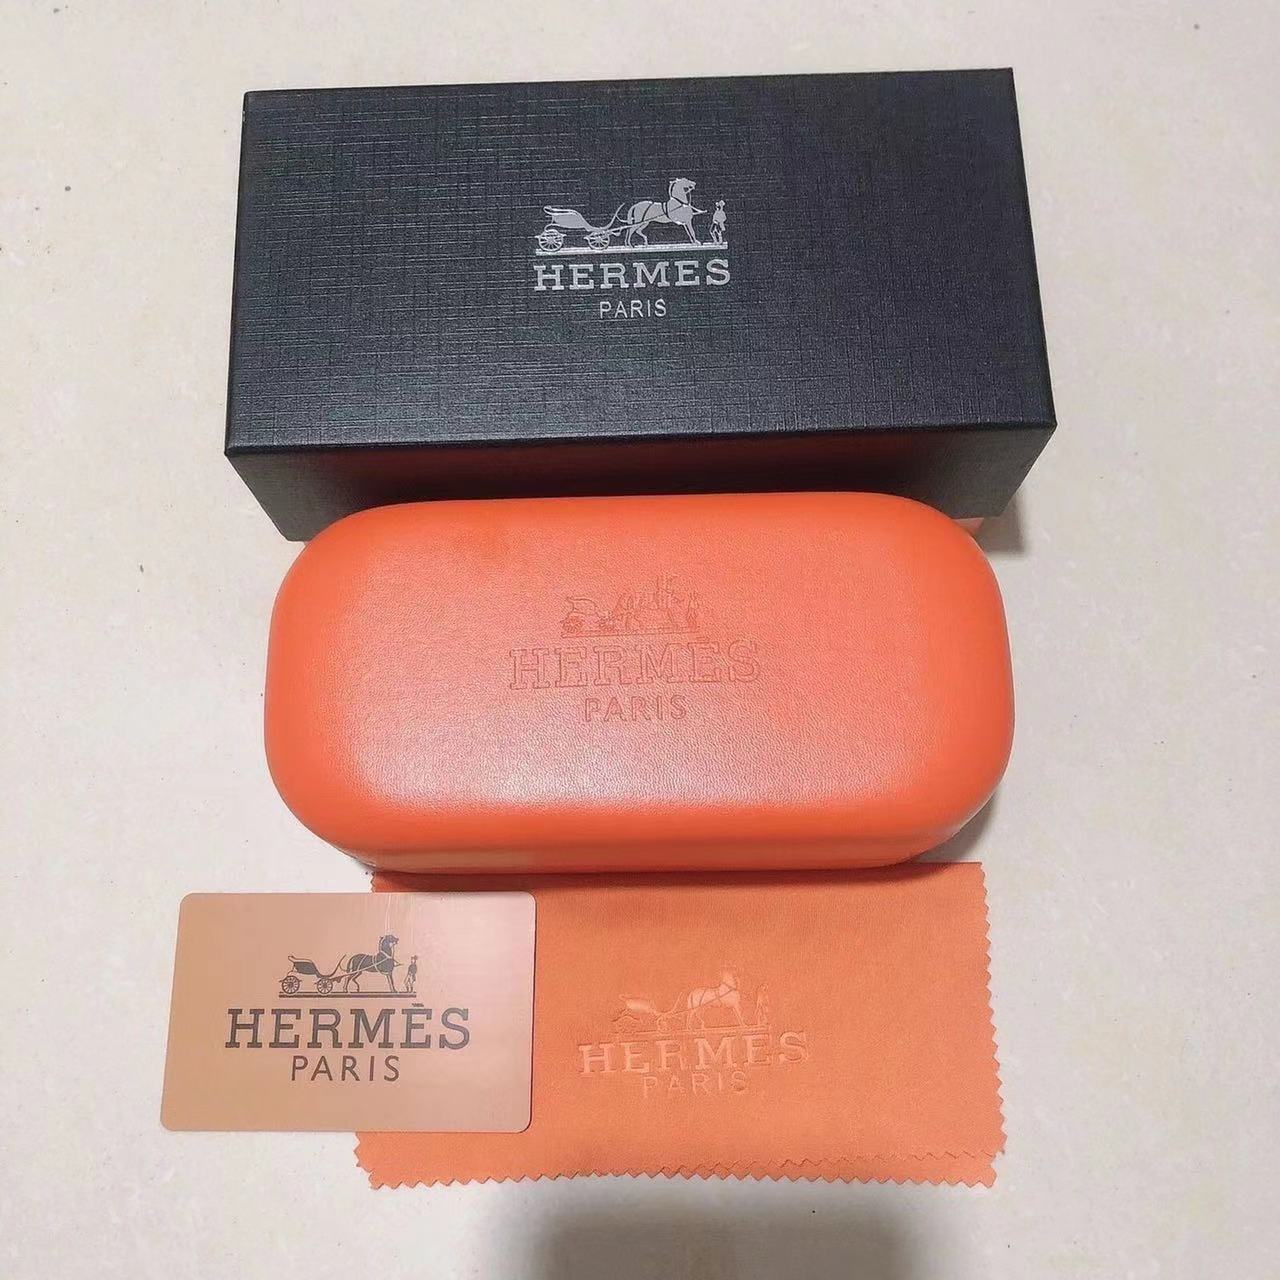 Hermes sunglasses package Box 1 set